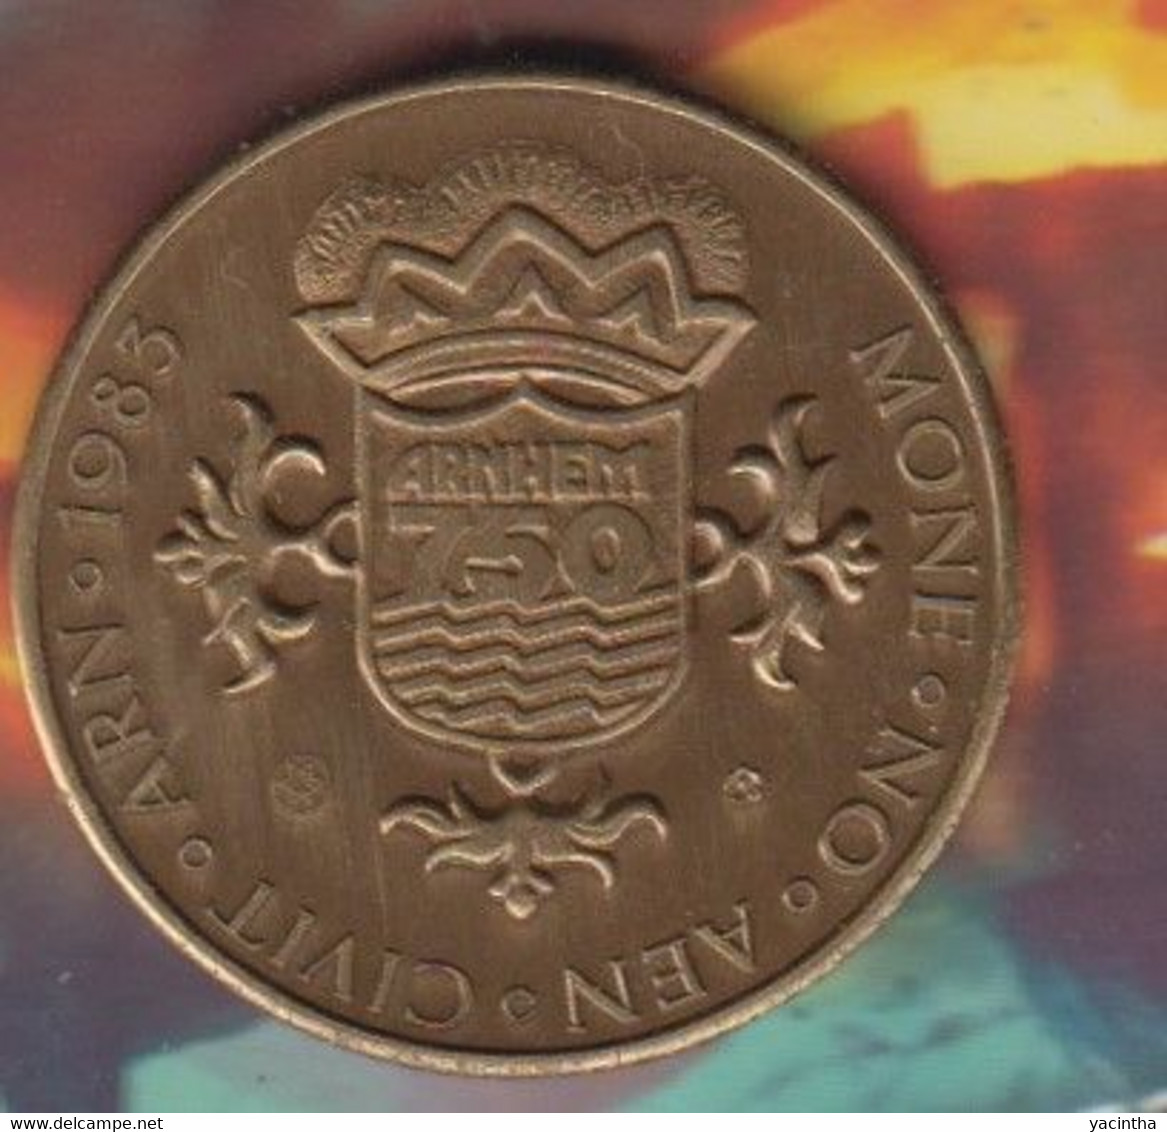 Arnhem  750 Jaar   1233 - 1983  Gele Rijders    (1010) - Monedas Elongadas (elongated Coins)